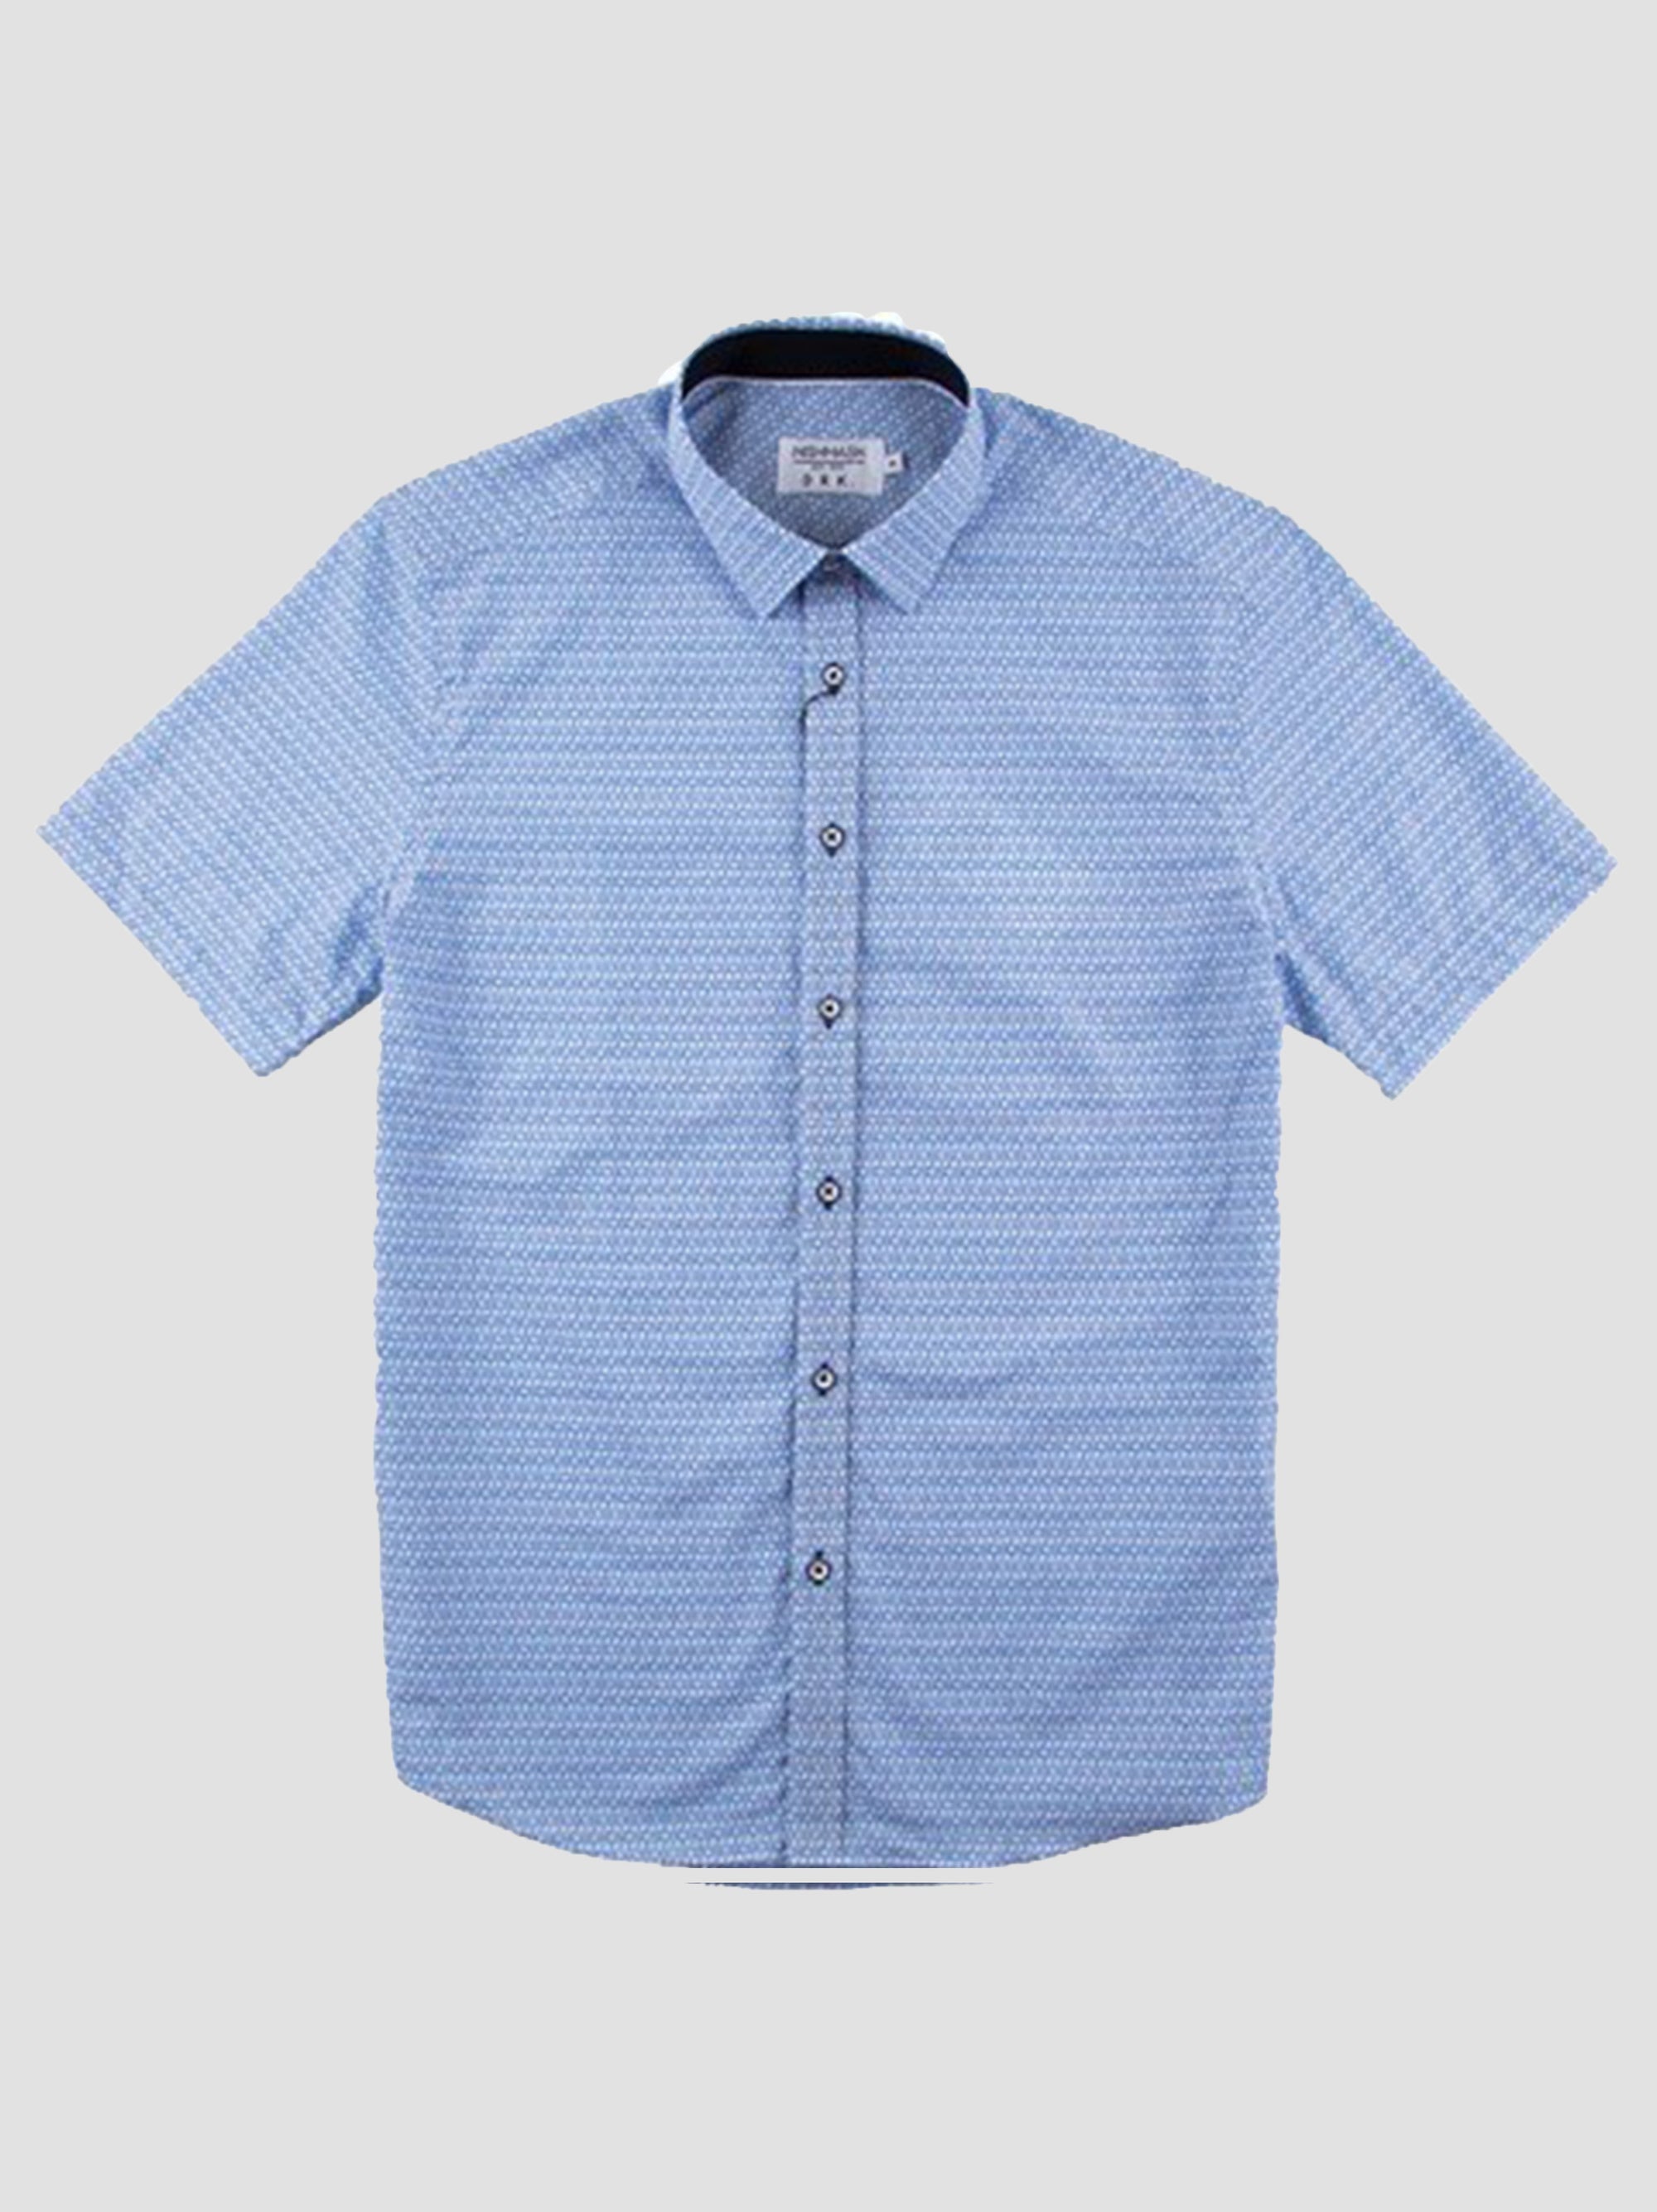 latitude-navy-smart-printed-mens-short-sleeve-shirt-mish-mash